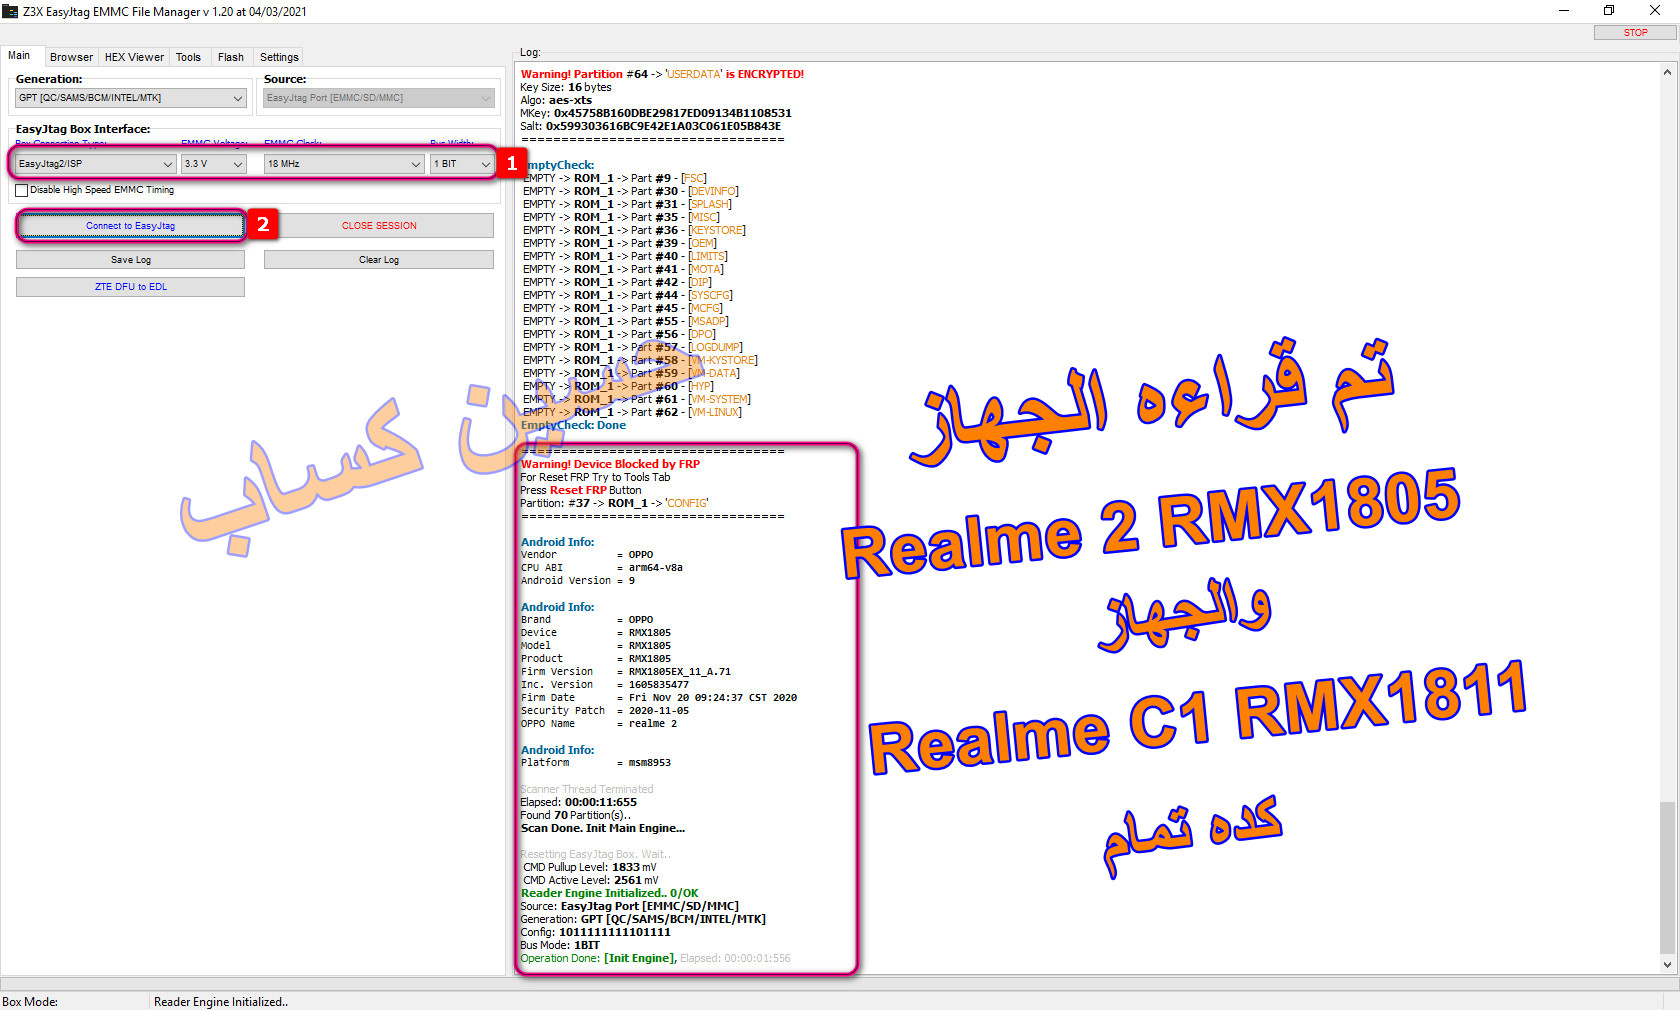     Realme C1 RMX1811